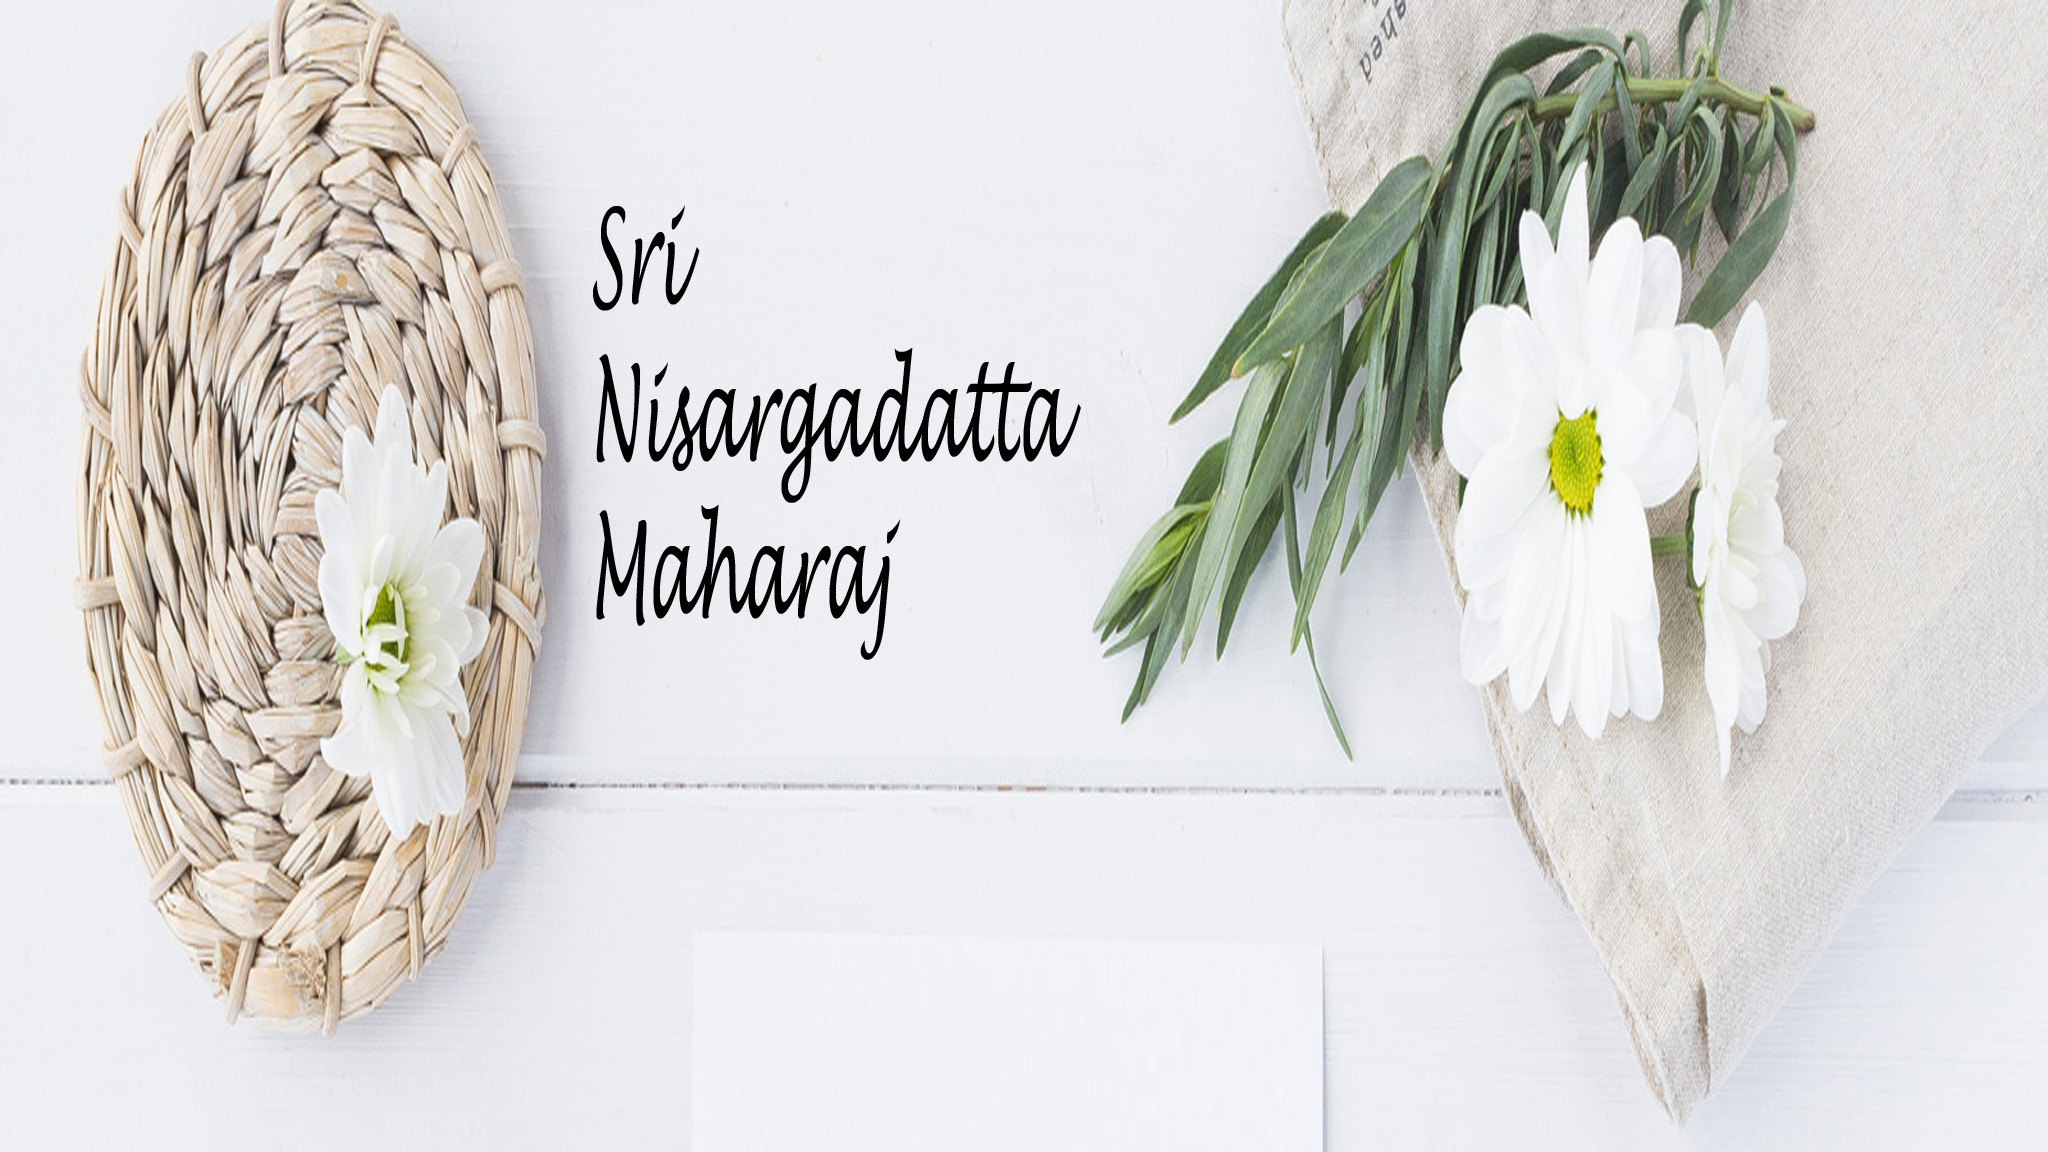 Sri Nisargadatta Maharaj Teachings of the Great Sage